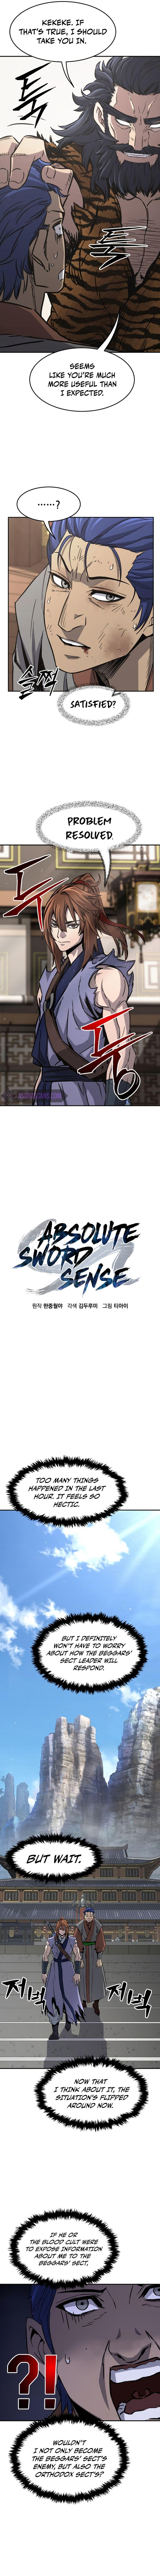 Absolute Sword Sense 35 9